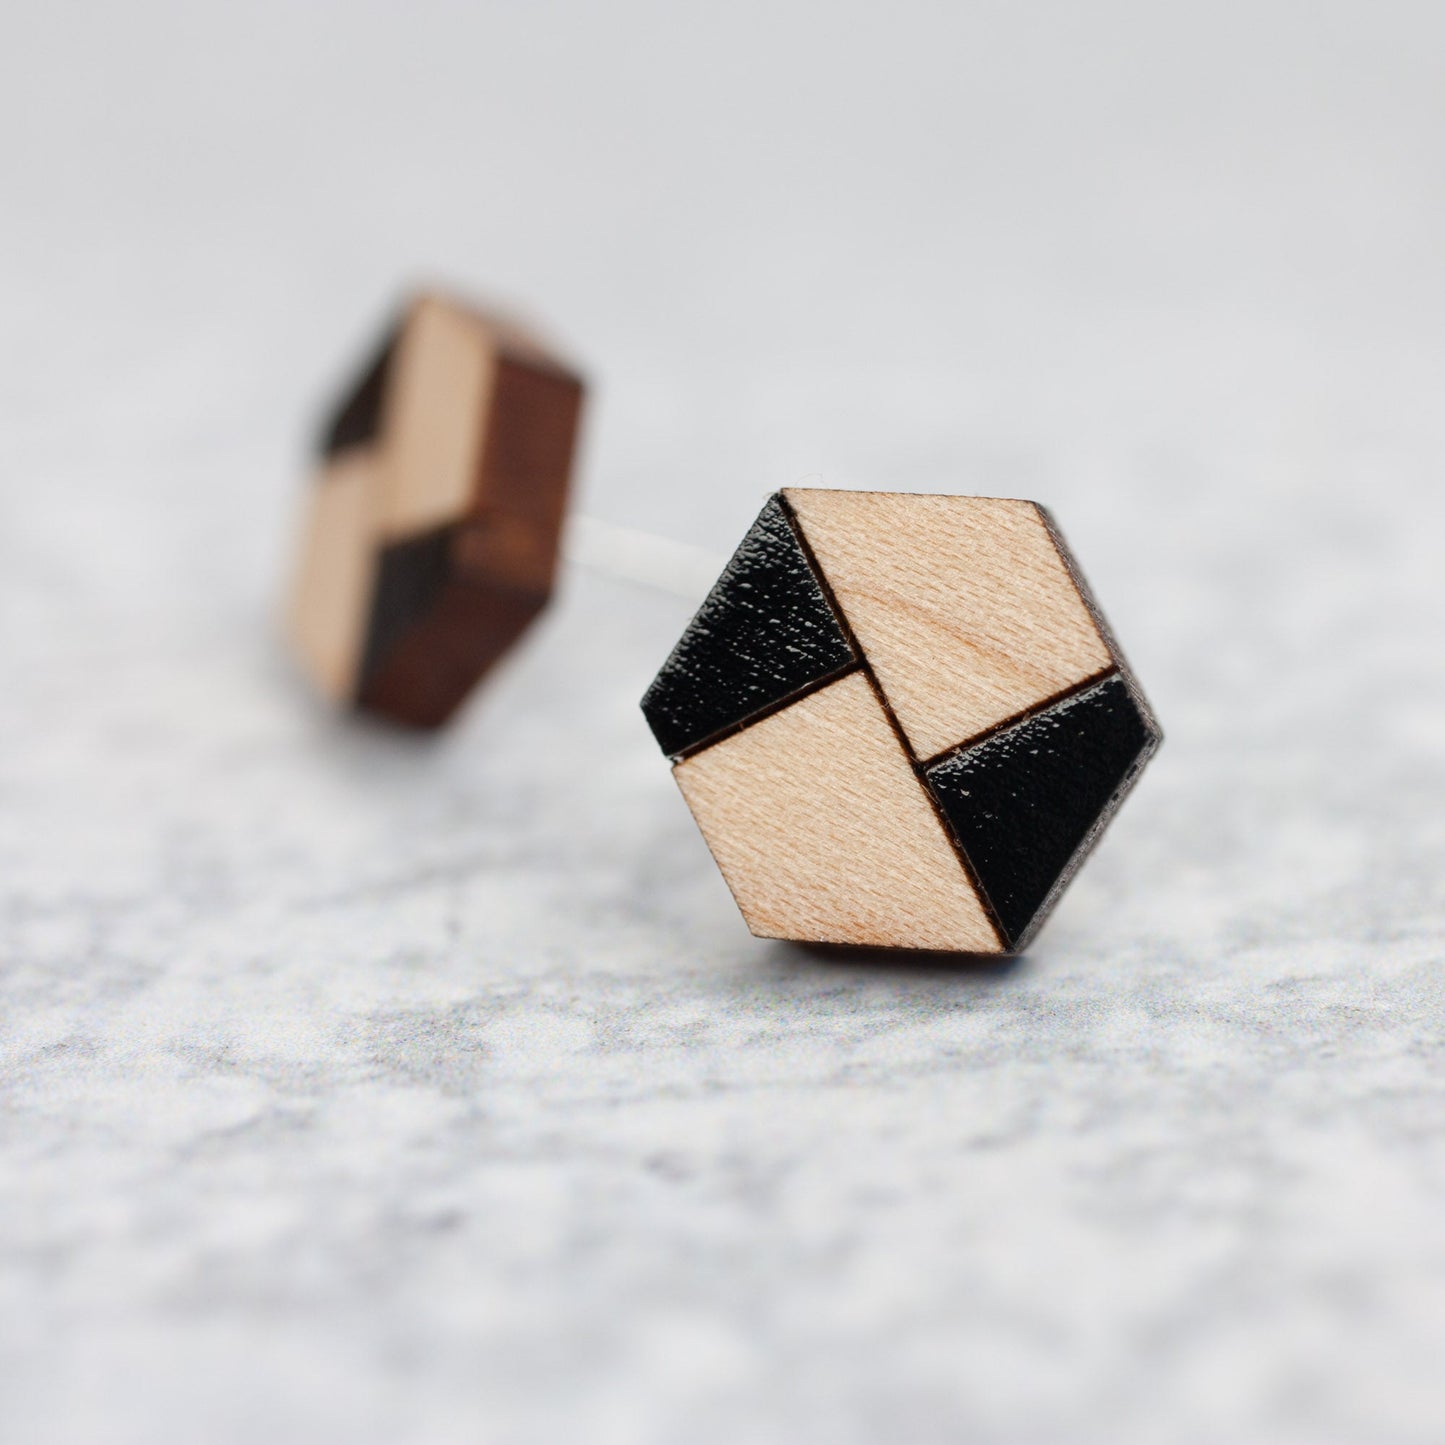 Wooden Laser Cut Earrings - Maple with Black Mondrian Hexagon - by LeeMo Designs in Bend, Oregon